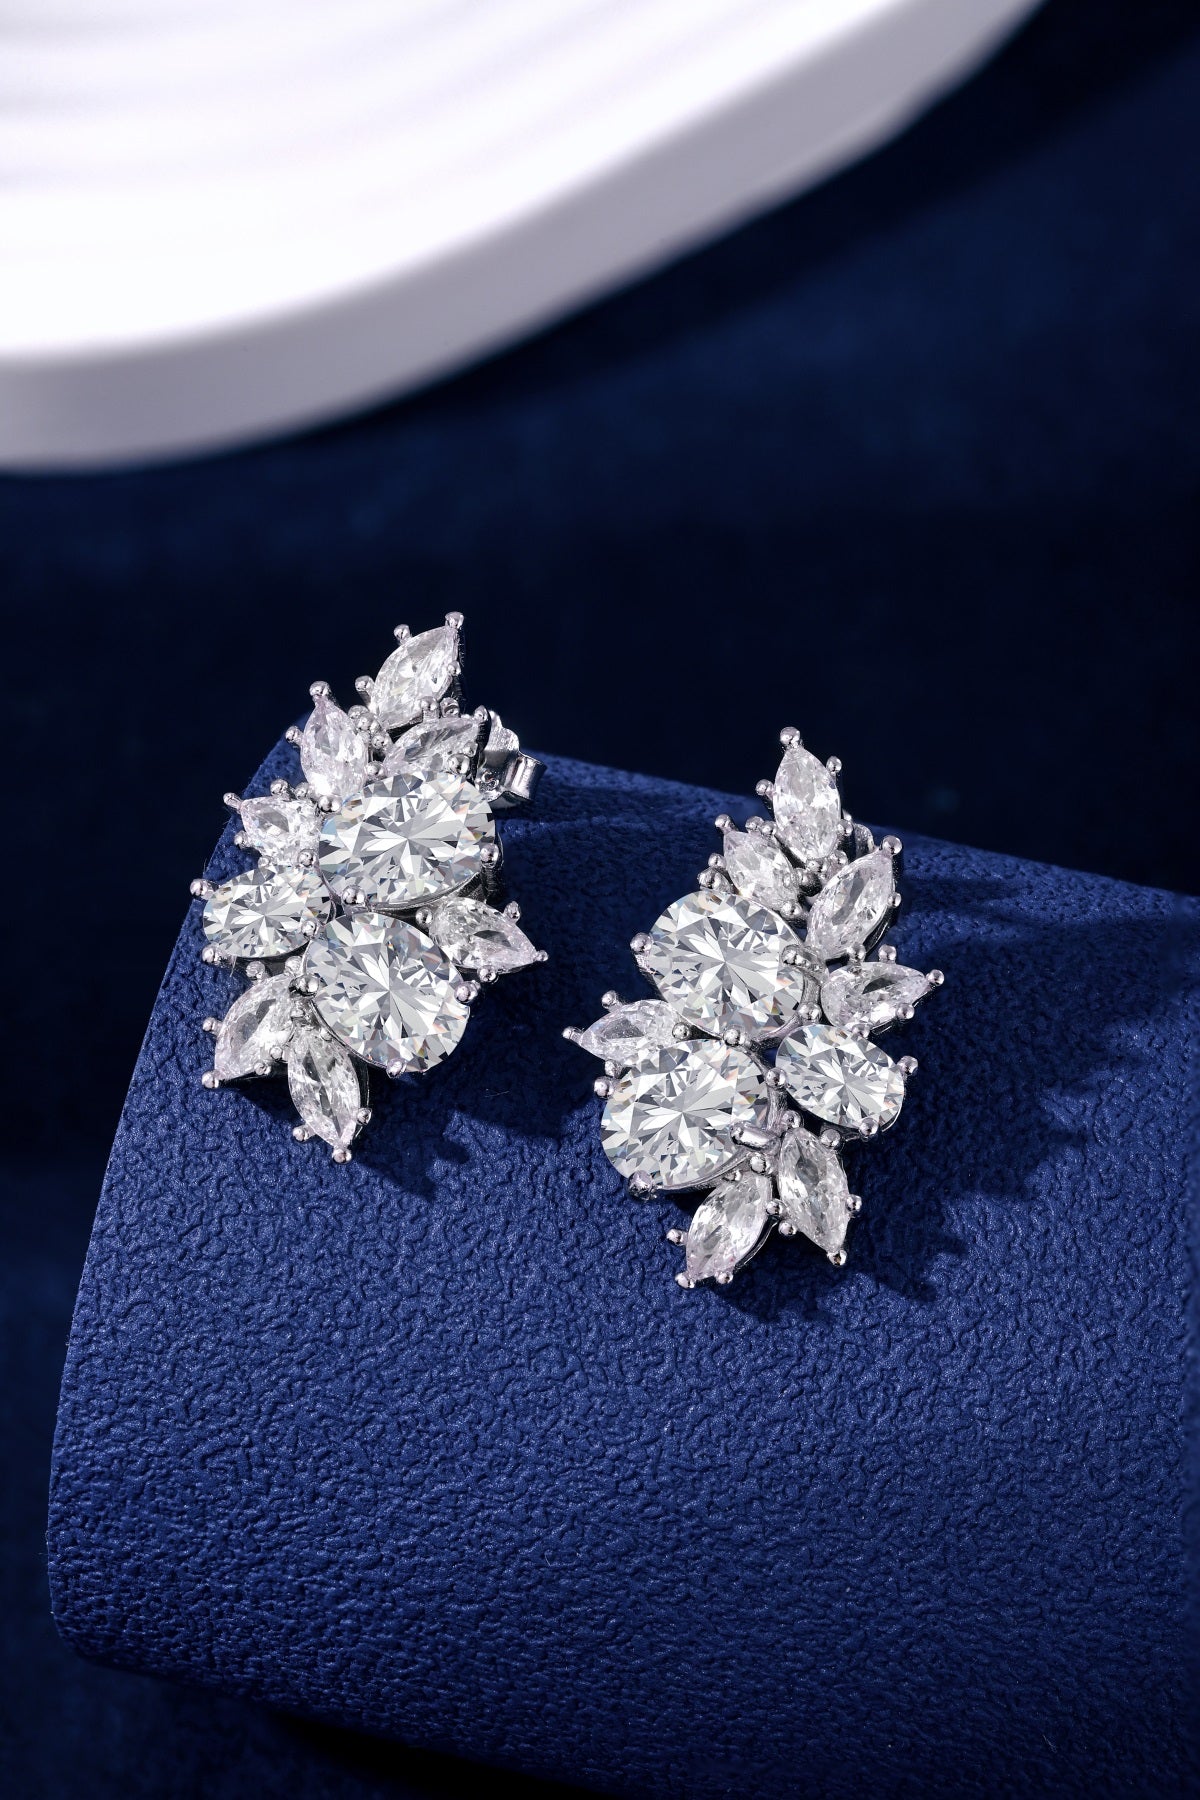 Sterling Silver Cluster Stud Earrings - HK Jewels